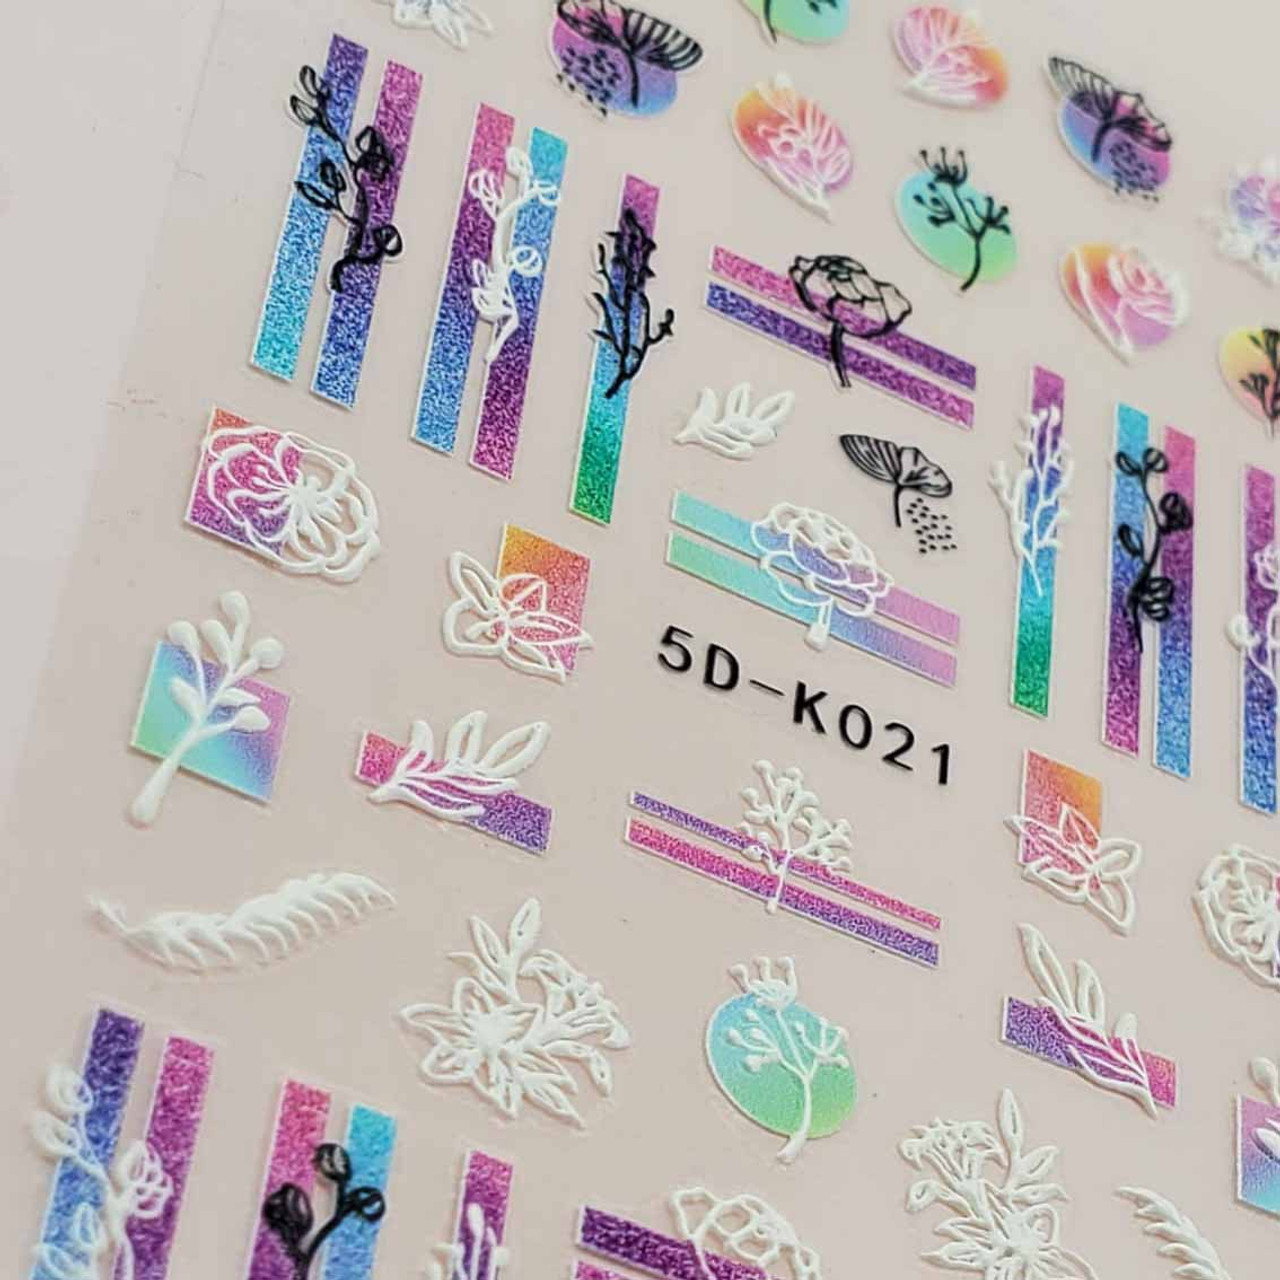 Embossed Rose Sticker Nail Art/ Flowers 3D Decorative Peel off